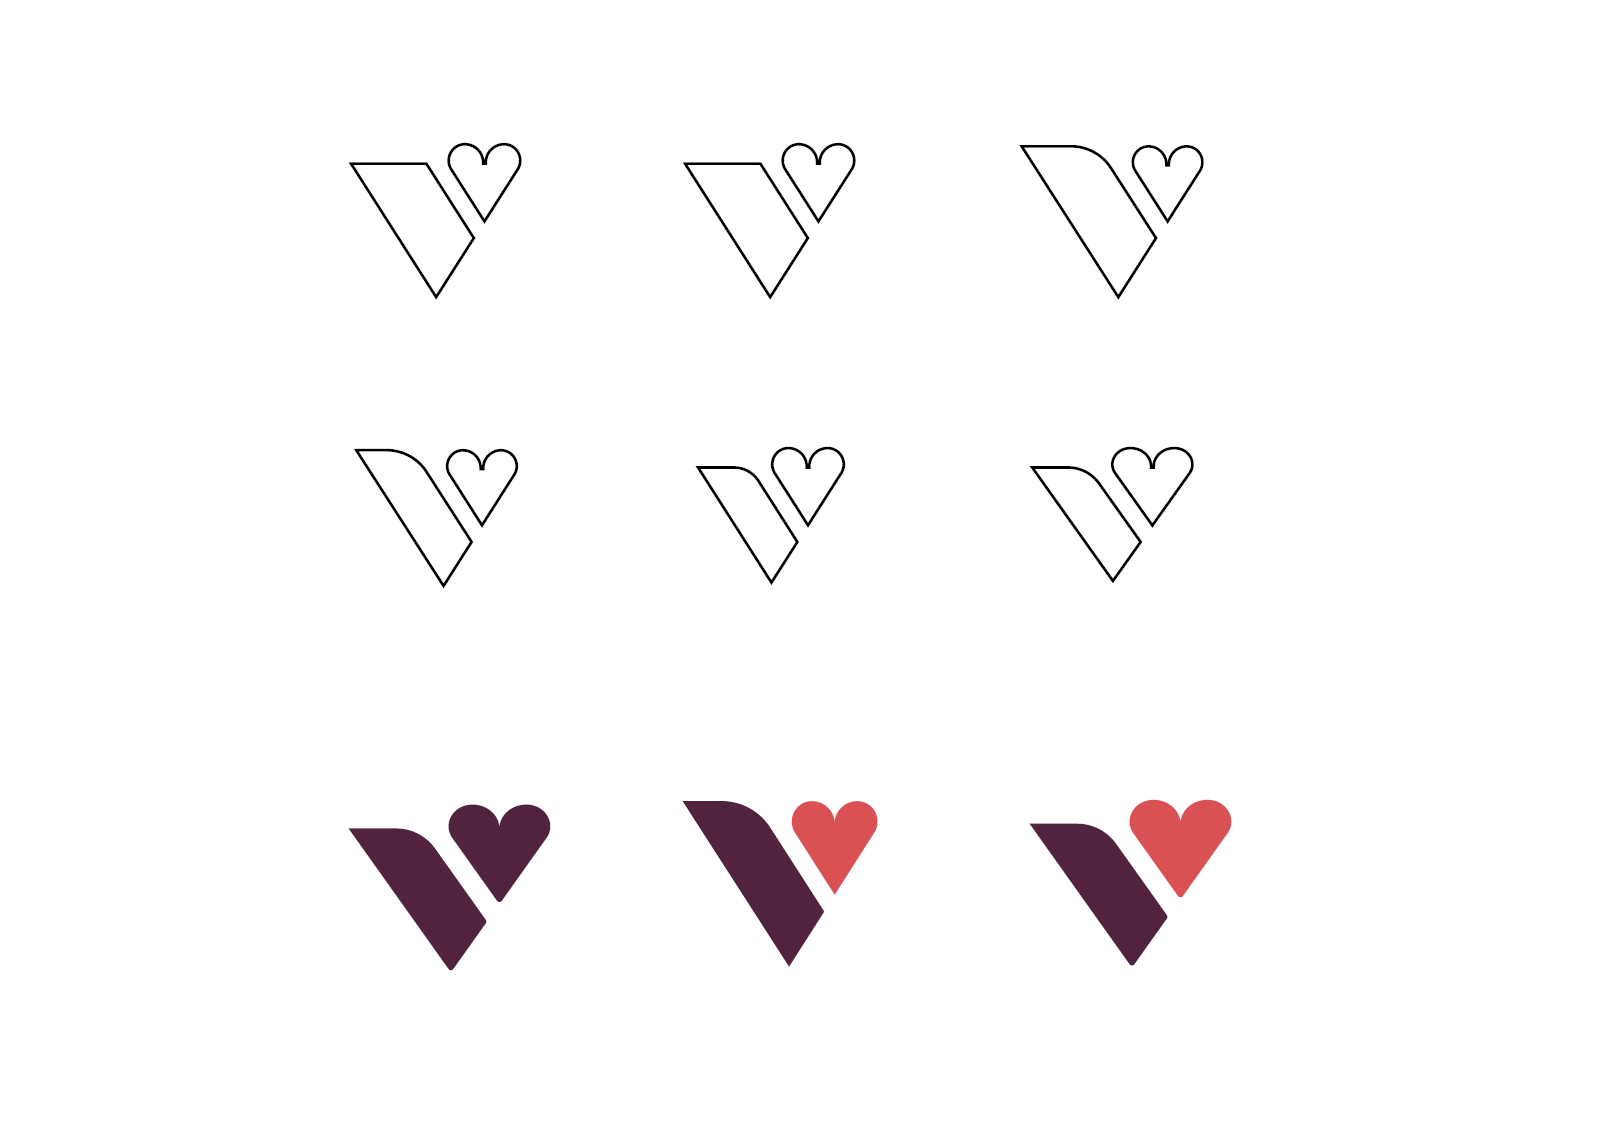 branding-and-logo-design-sydney-creative-agency-veemance-2